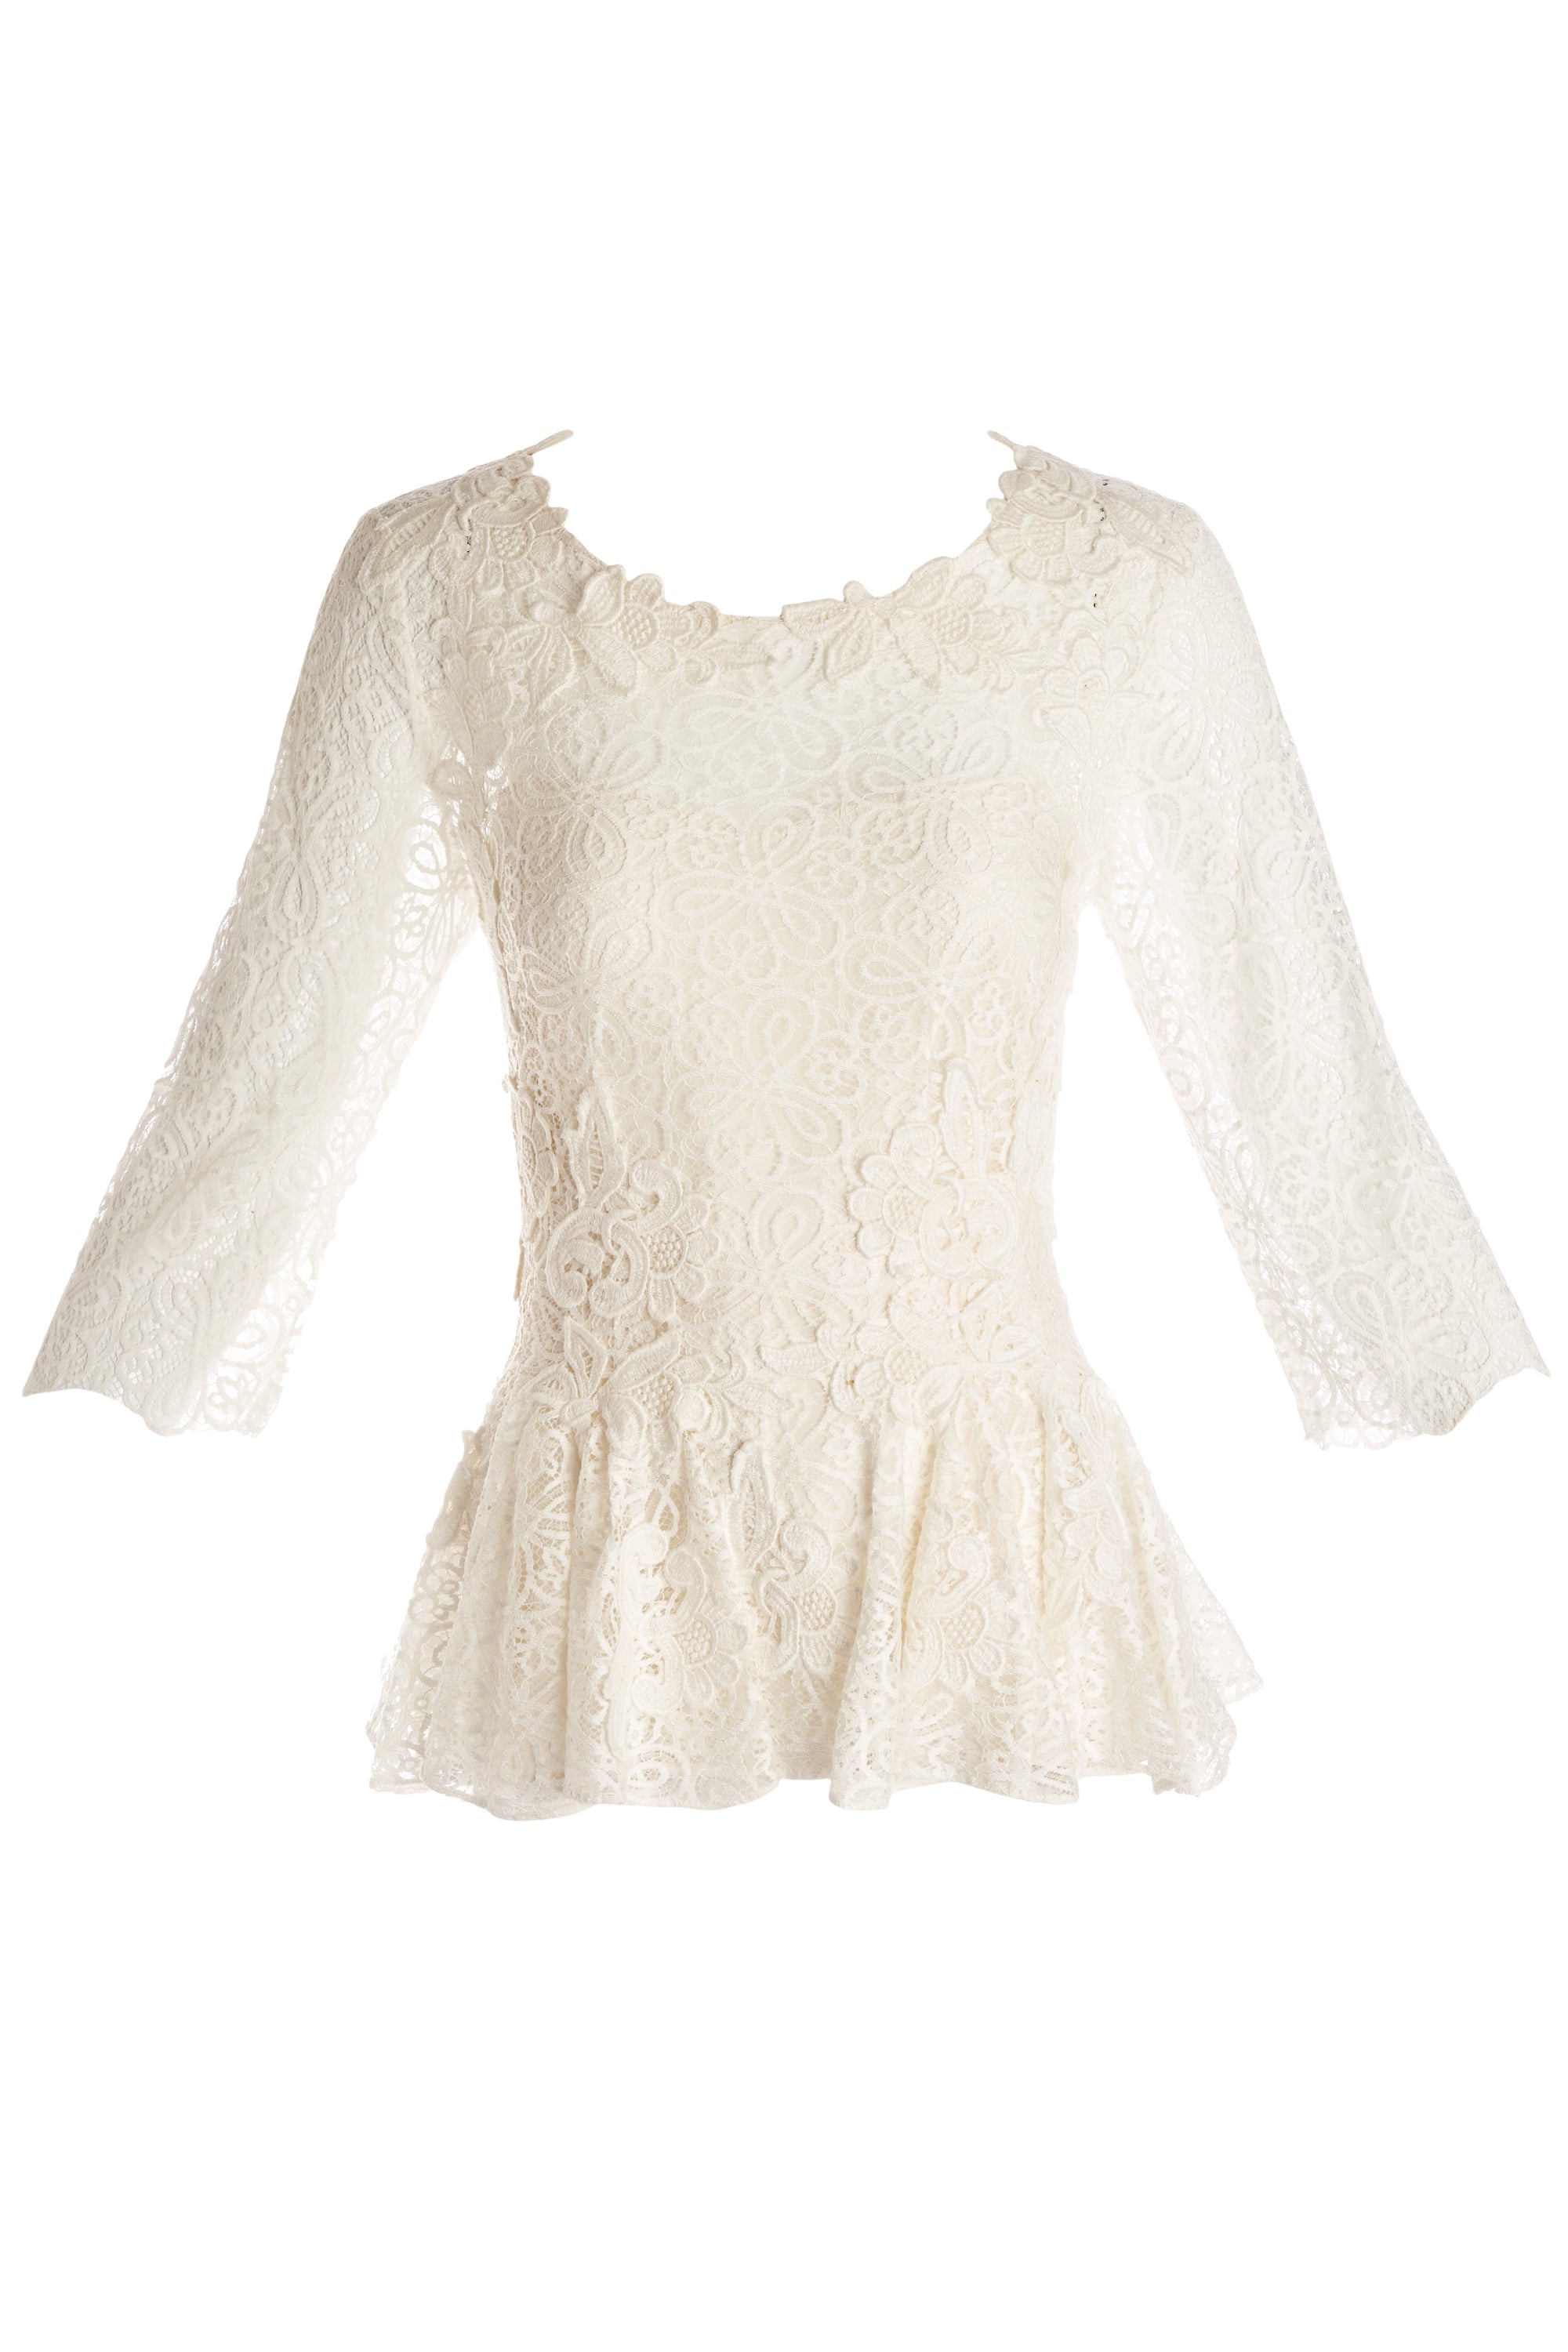 Oscar de la Renta White Lace 3/4 Sleeve Peplum Skirt - Foxy Couture Carmel